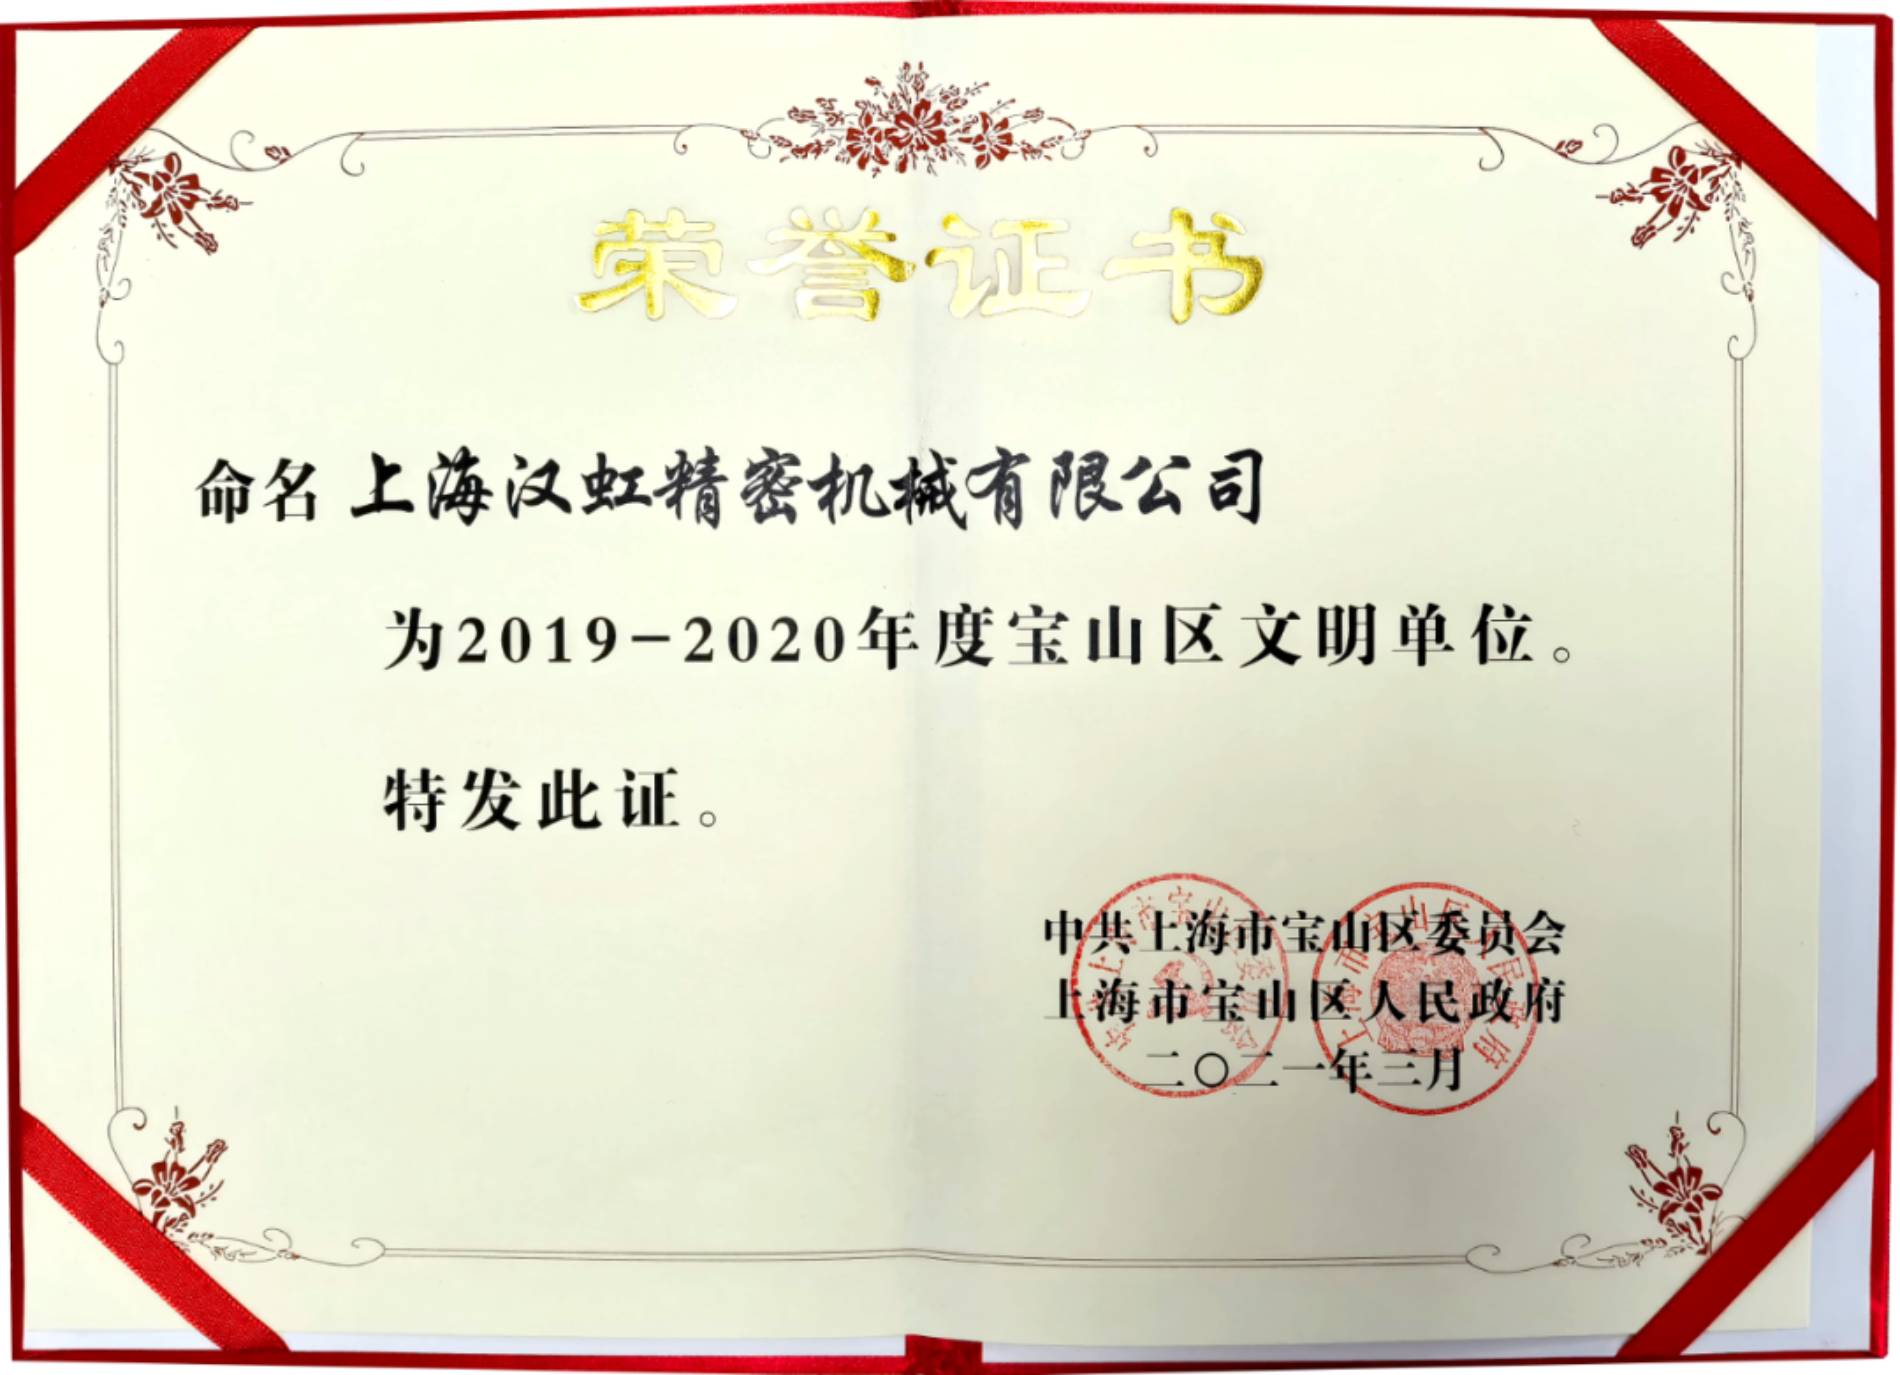 Shanghai?Hanhong?Precision?Machinery?Co.,Ltd. won the honor of Baoshan civilized unit in 2019-2020